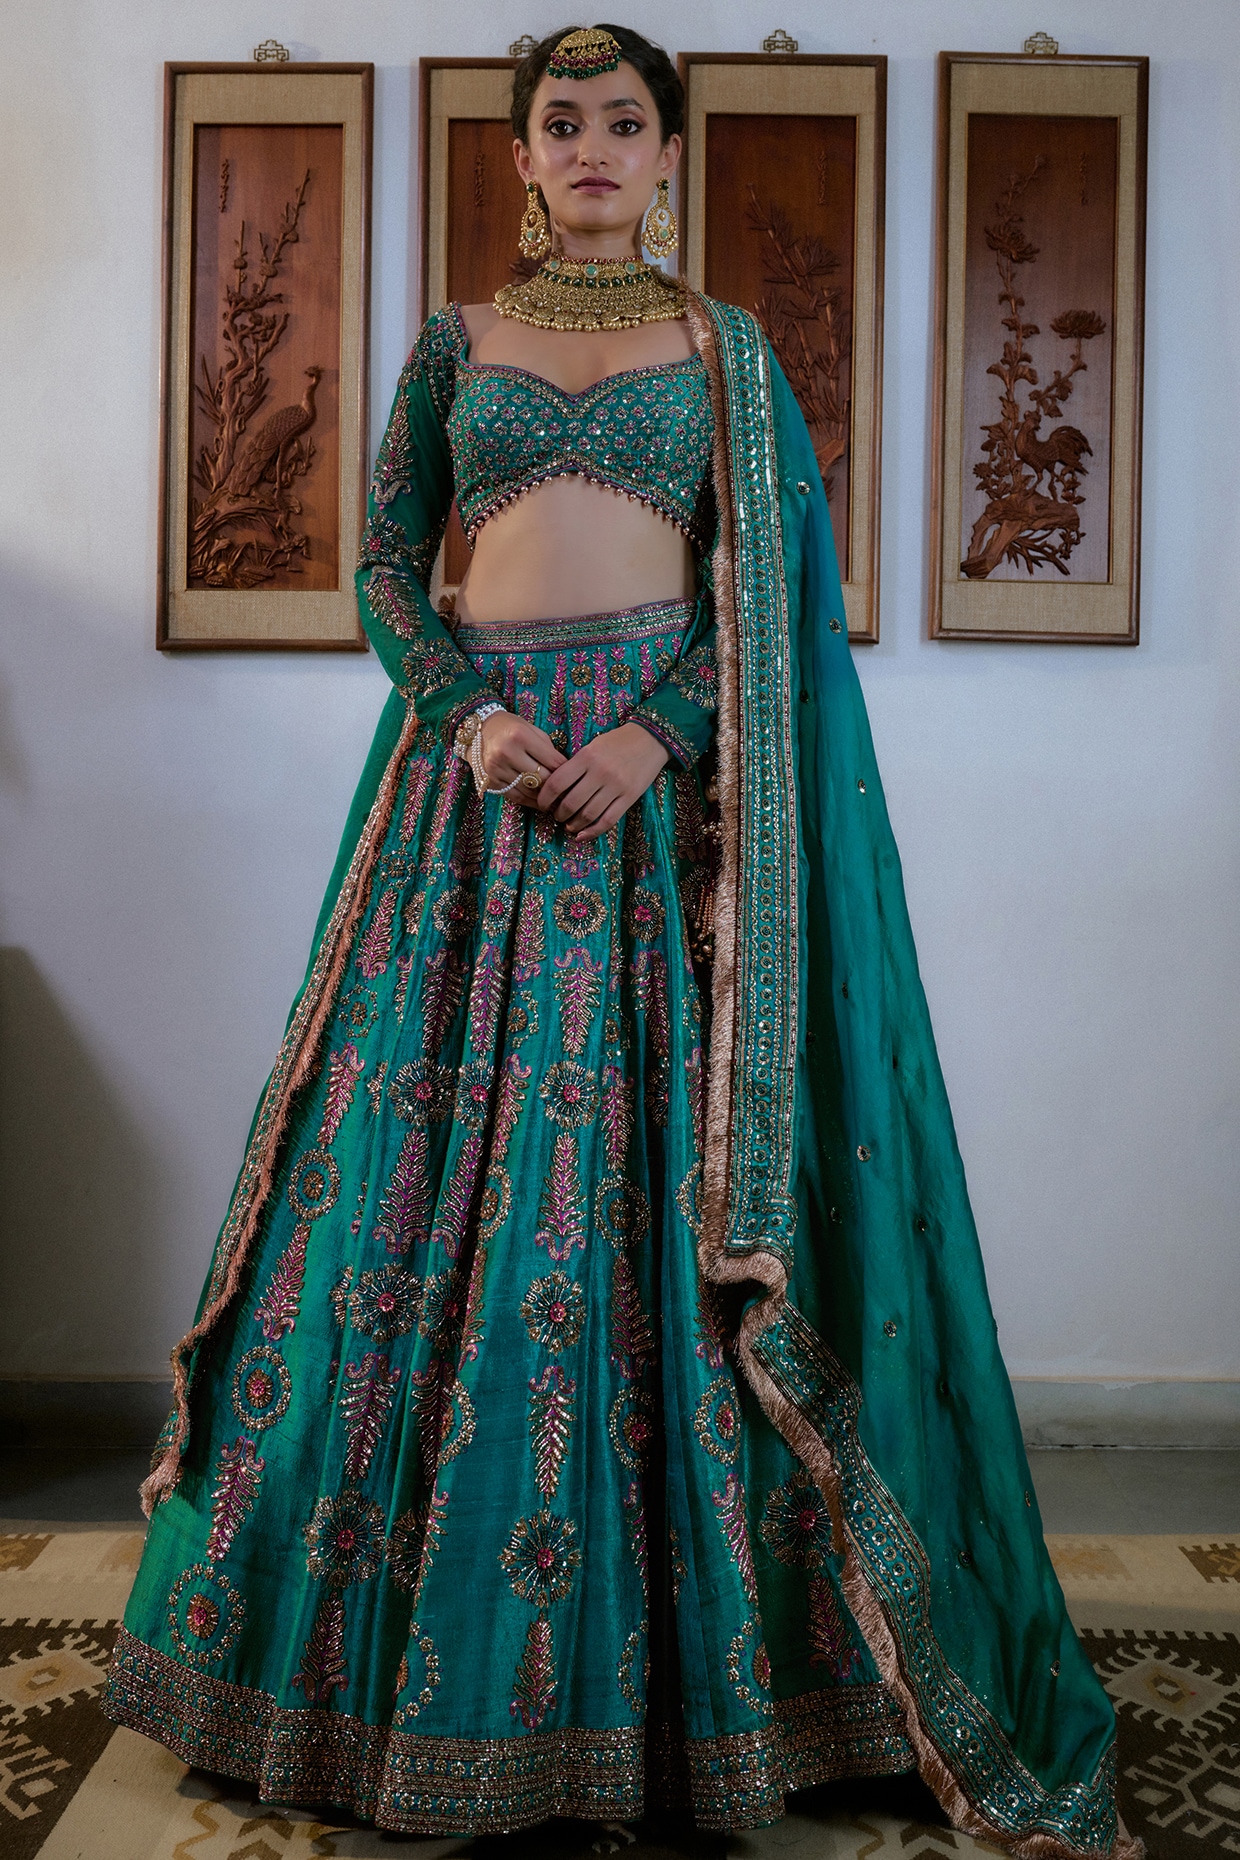 Purple Indian Wedding Outfit: Women's Mirrorwork Lehenga Choli |  Traditional indian dress, Indian bridal outfits, Indian dresses traditional